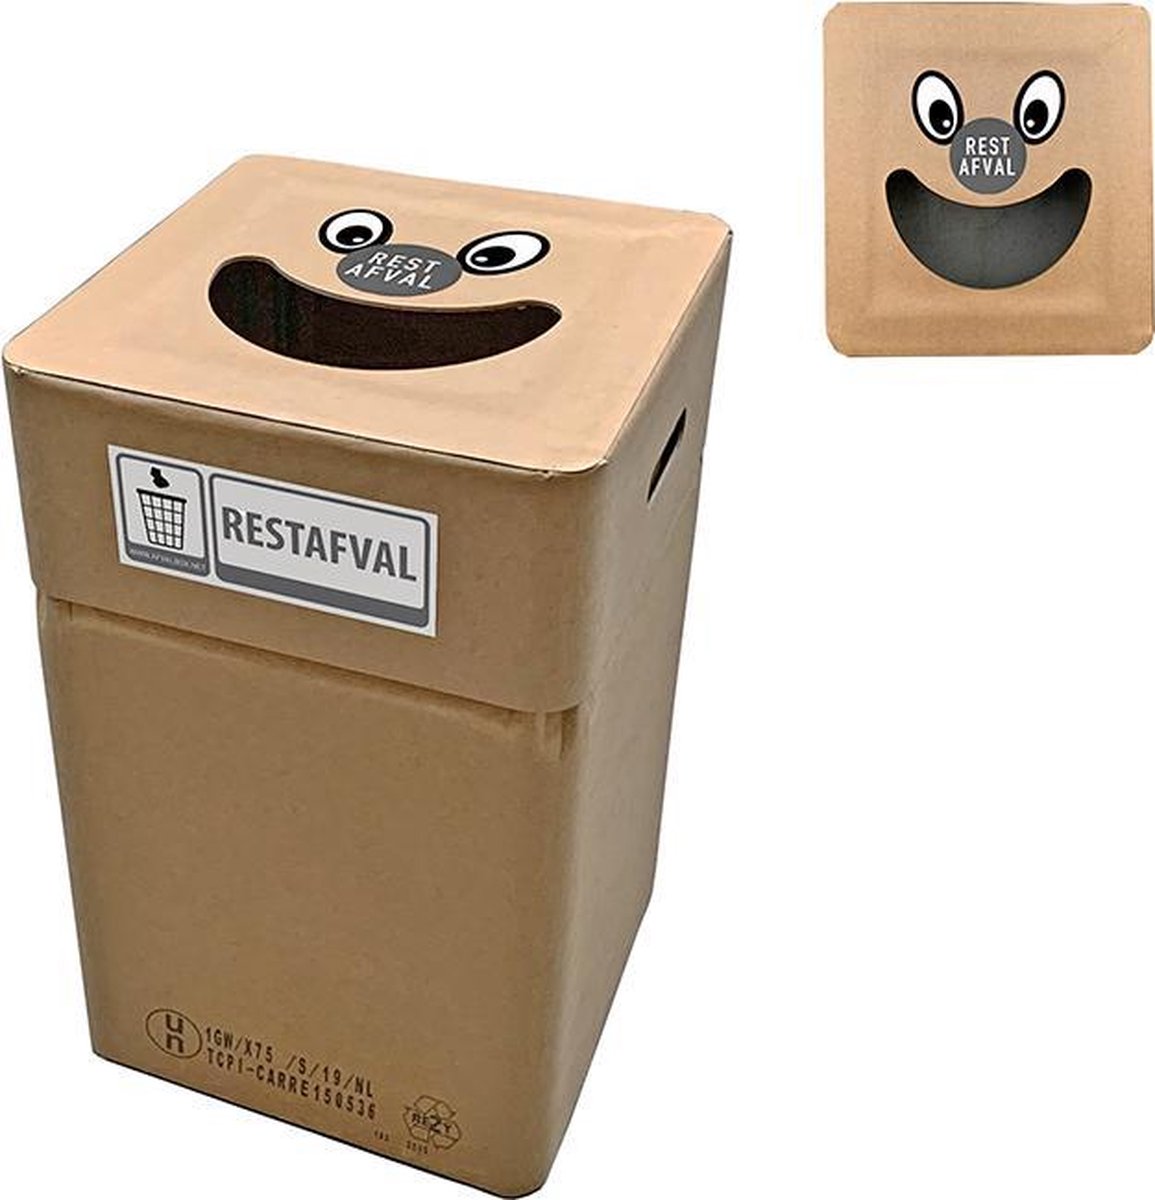 Kartonnen prullenbak/afvalbak Restafval type smile (herbruikbaar)